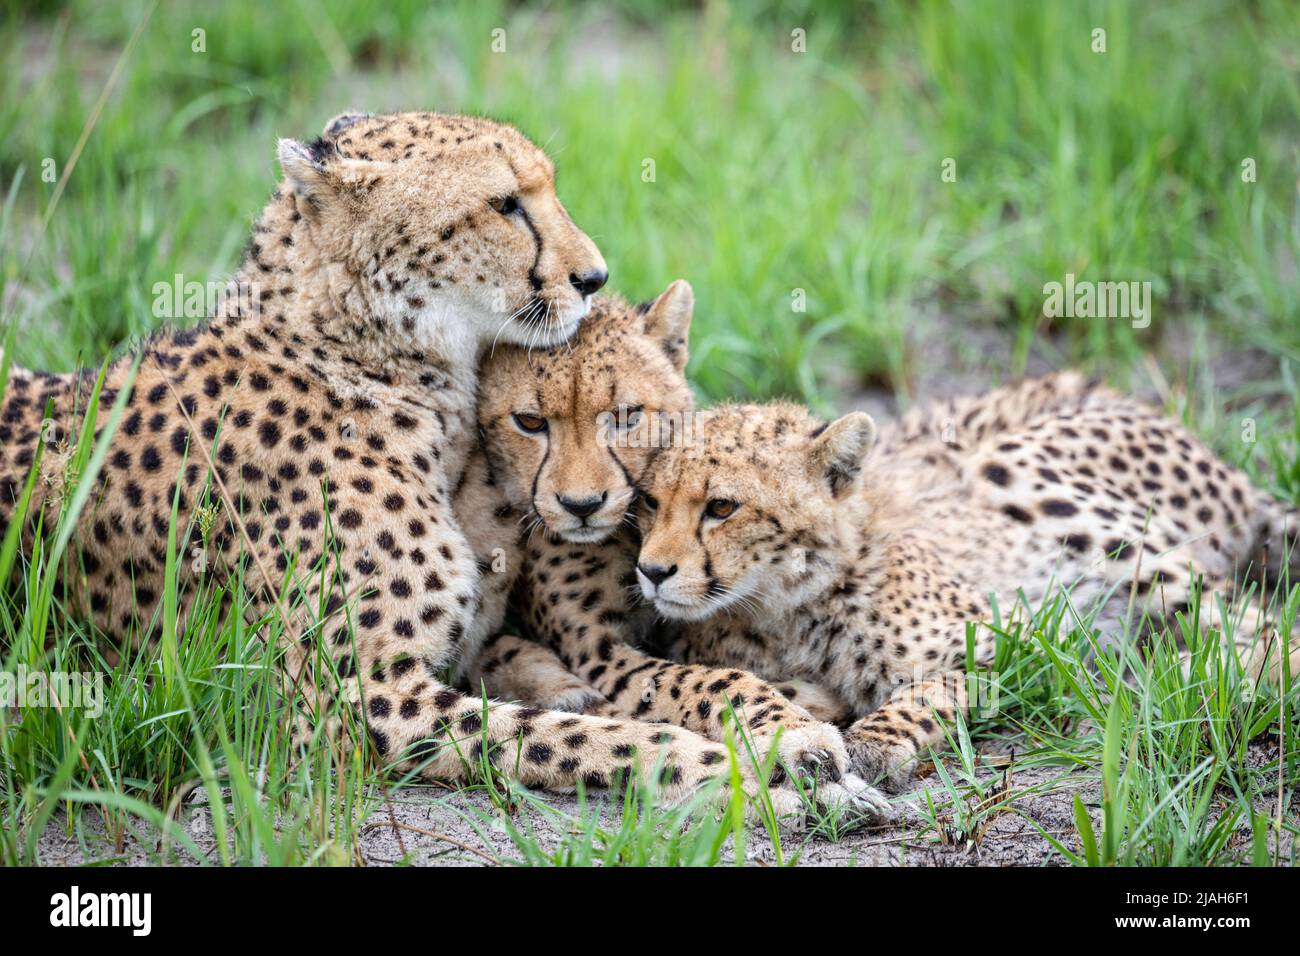 Cheetah's in Okavango Delta grassland Stock Photo